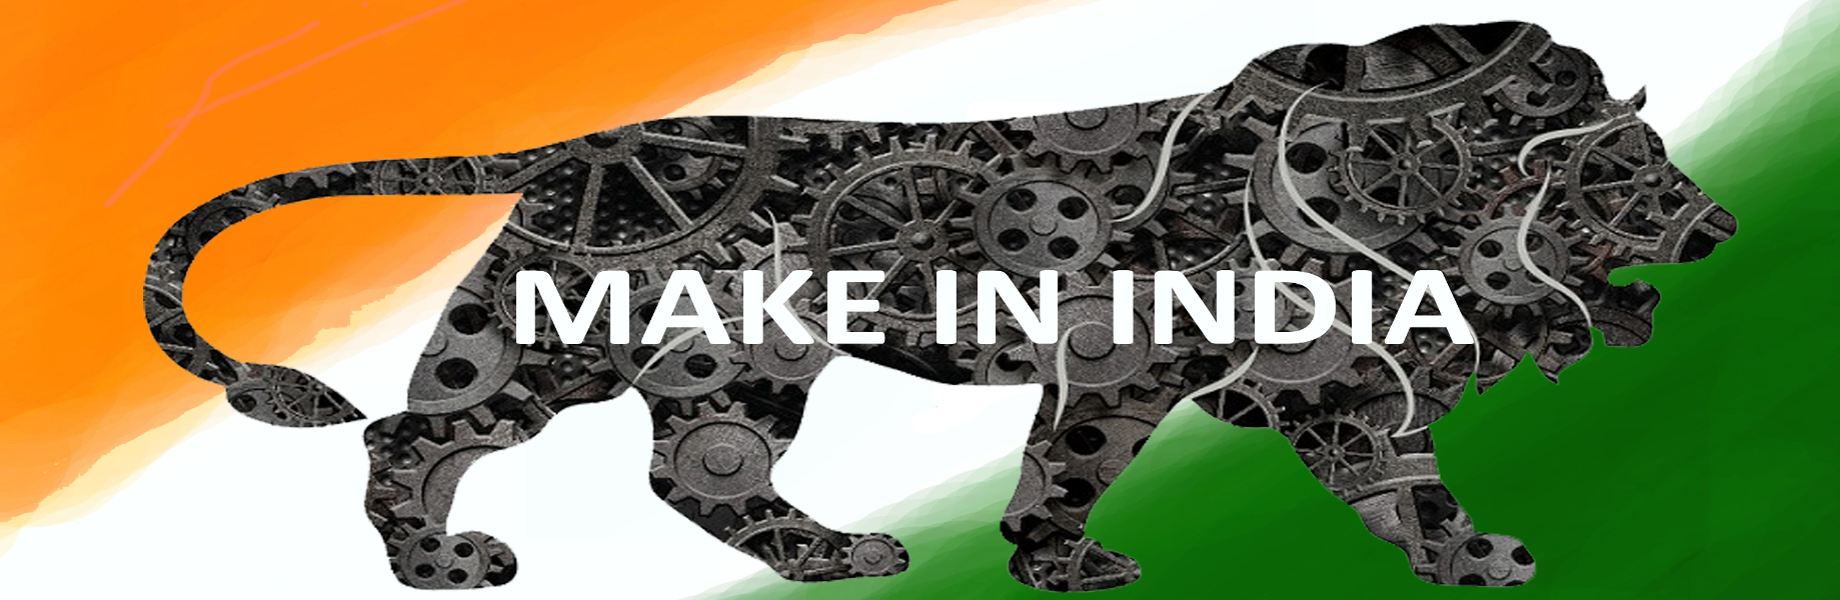 make in india by zealtek enterprises